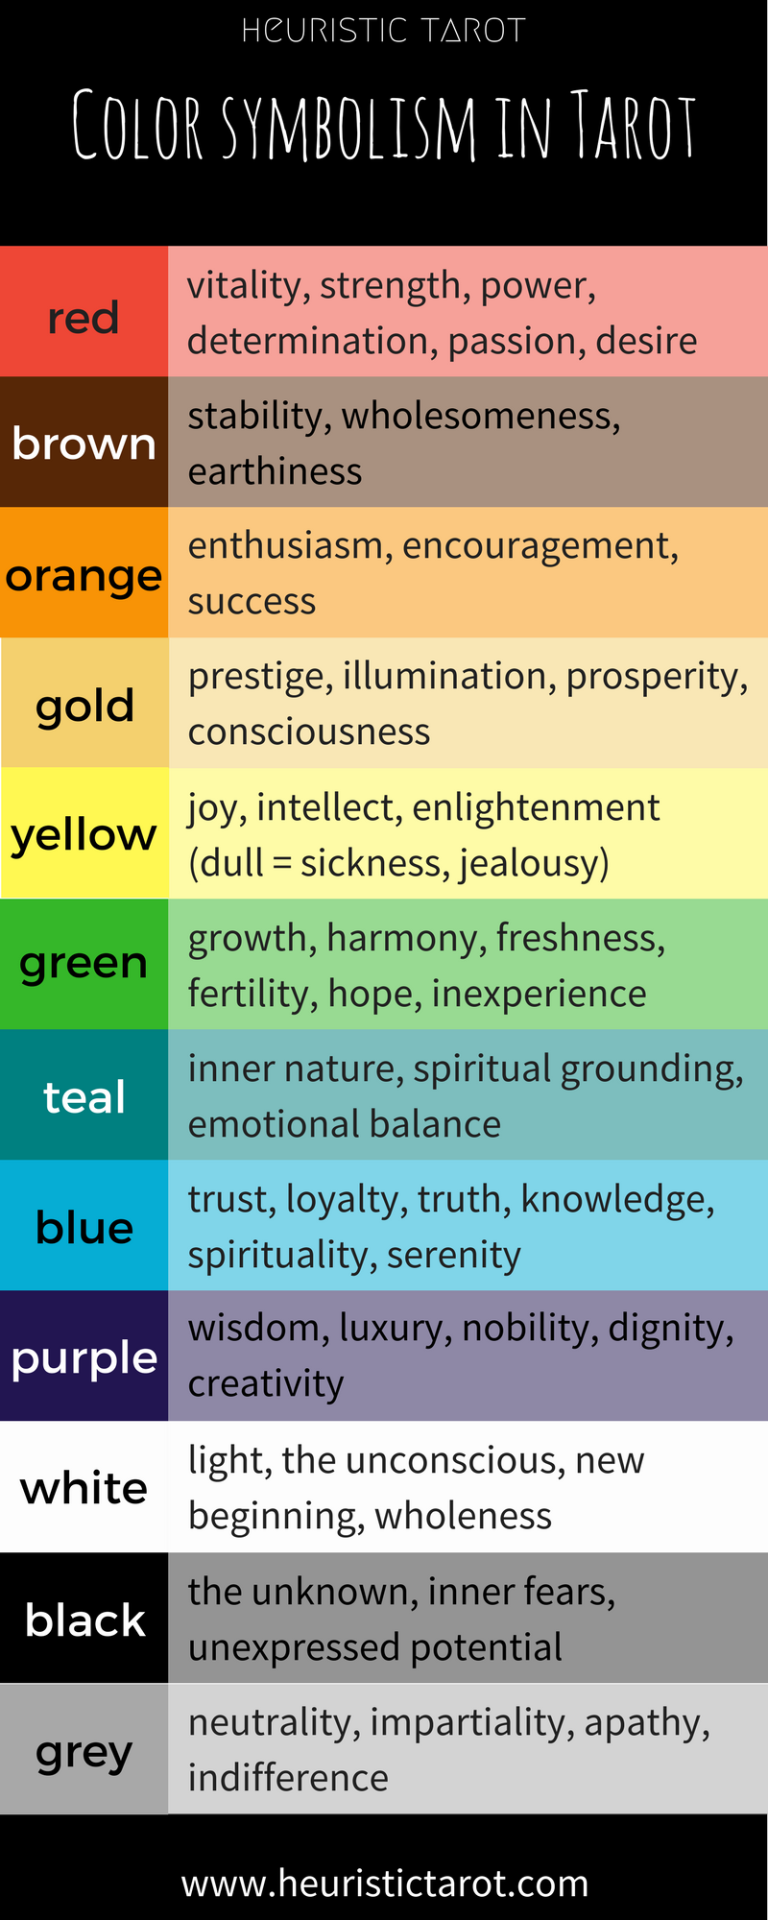 Color symbolism in Tarot - Heuristic Tarot